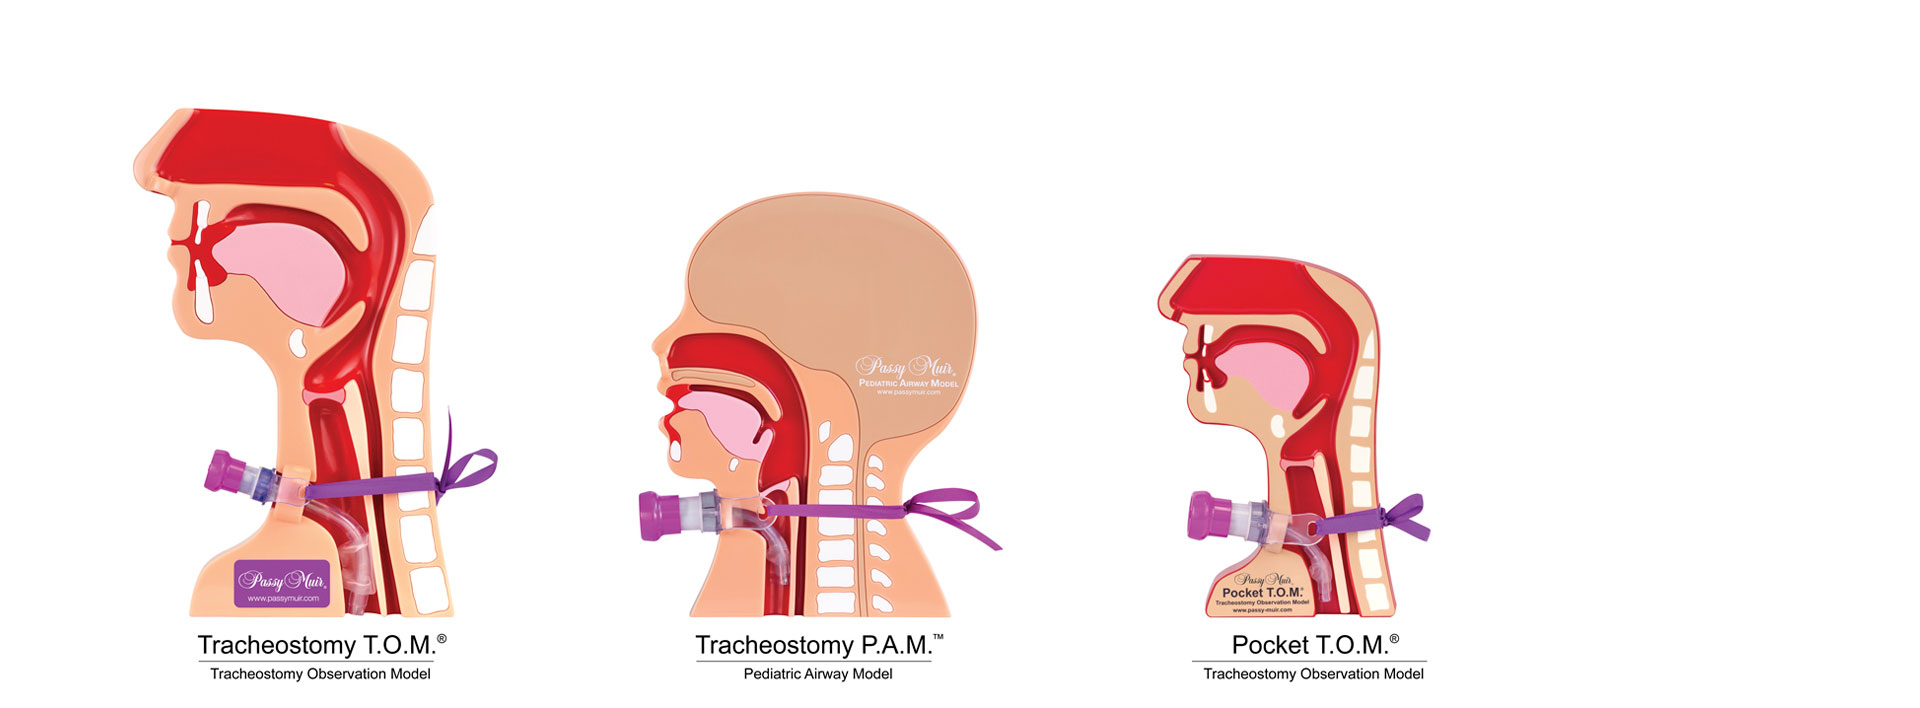 Tracheostomy T.O.M., Pocket T.O.M., Tracheostomy P.A.M. (Pediatric Airway Model)